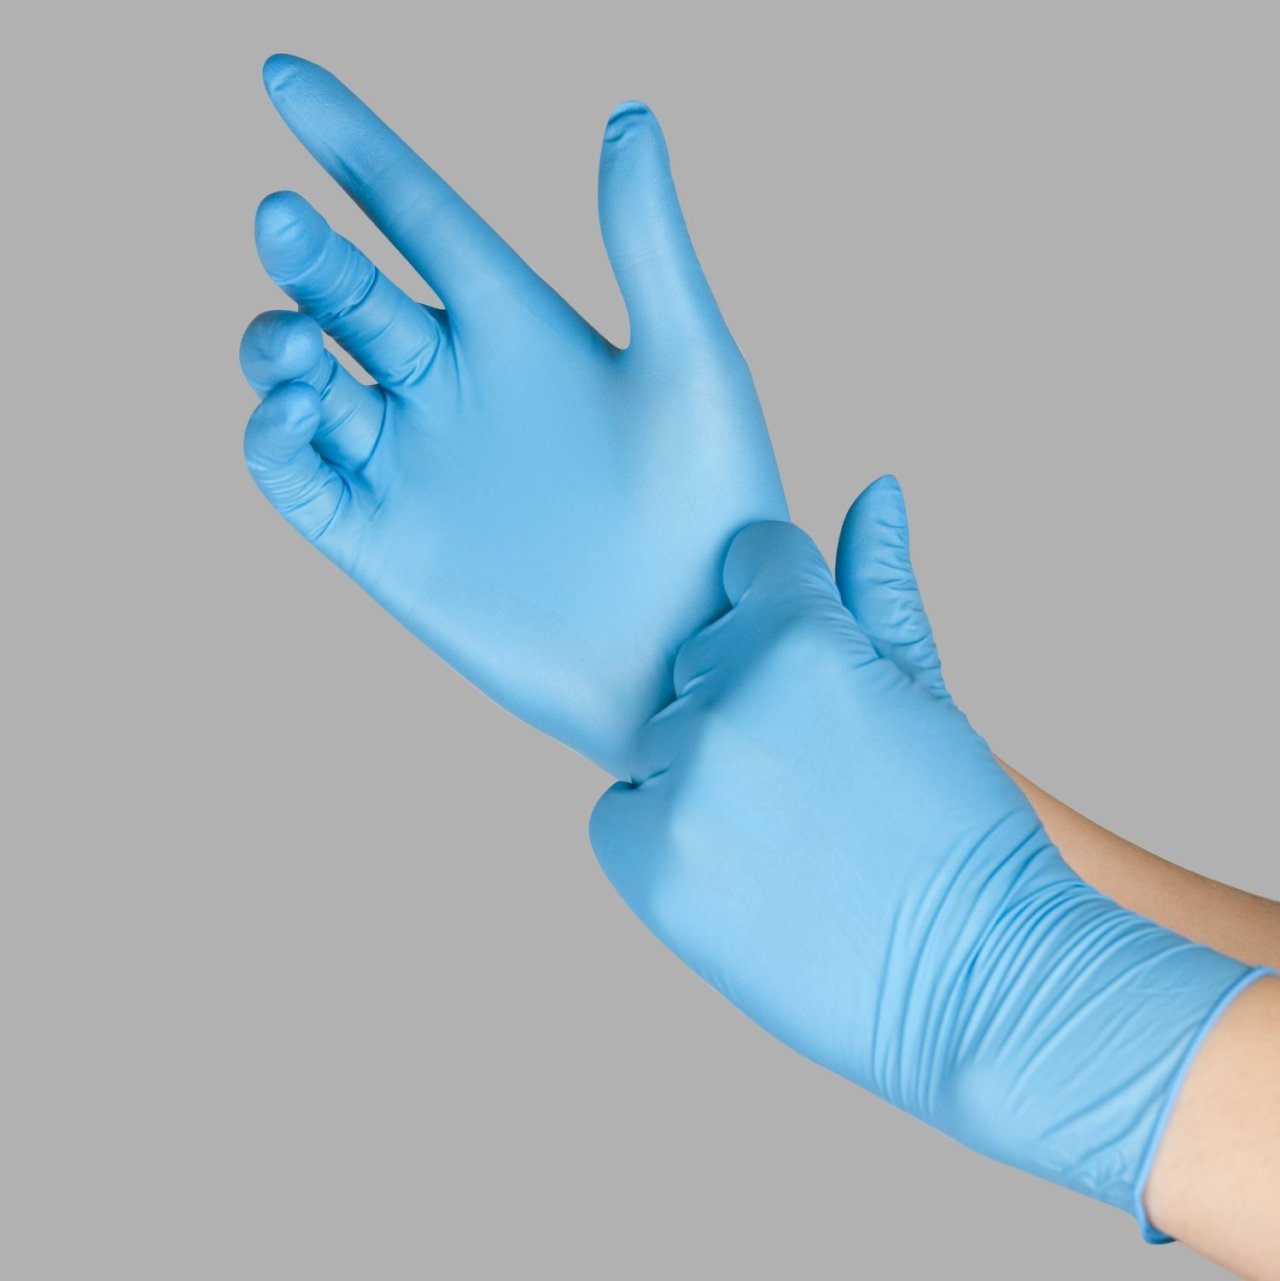 Medium powder free nitrile gloves